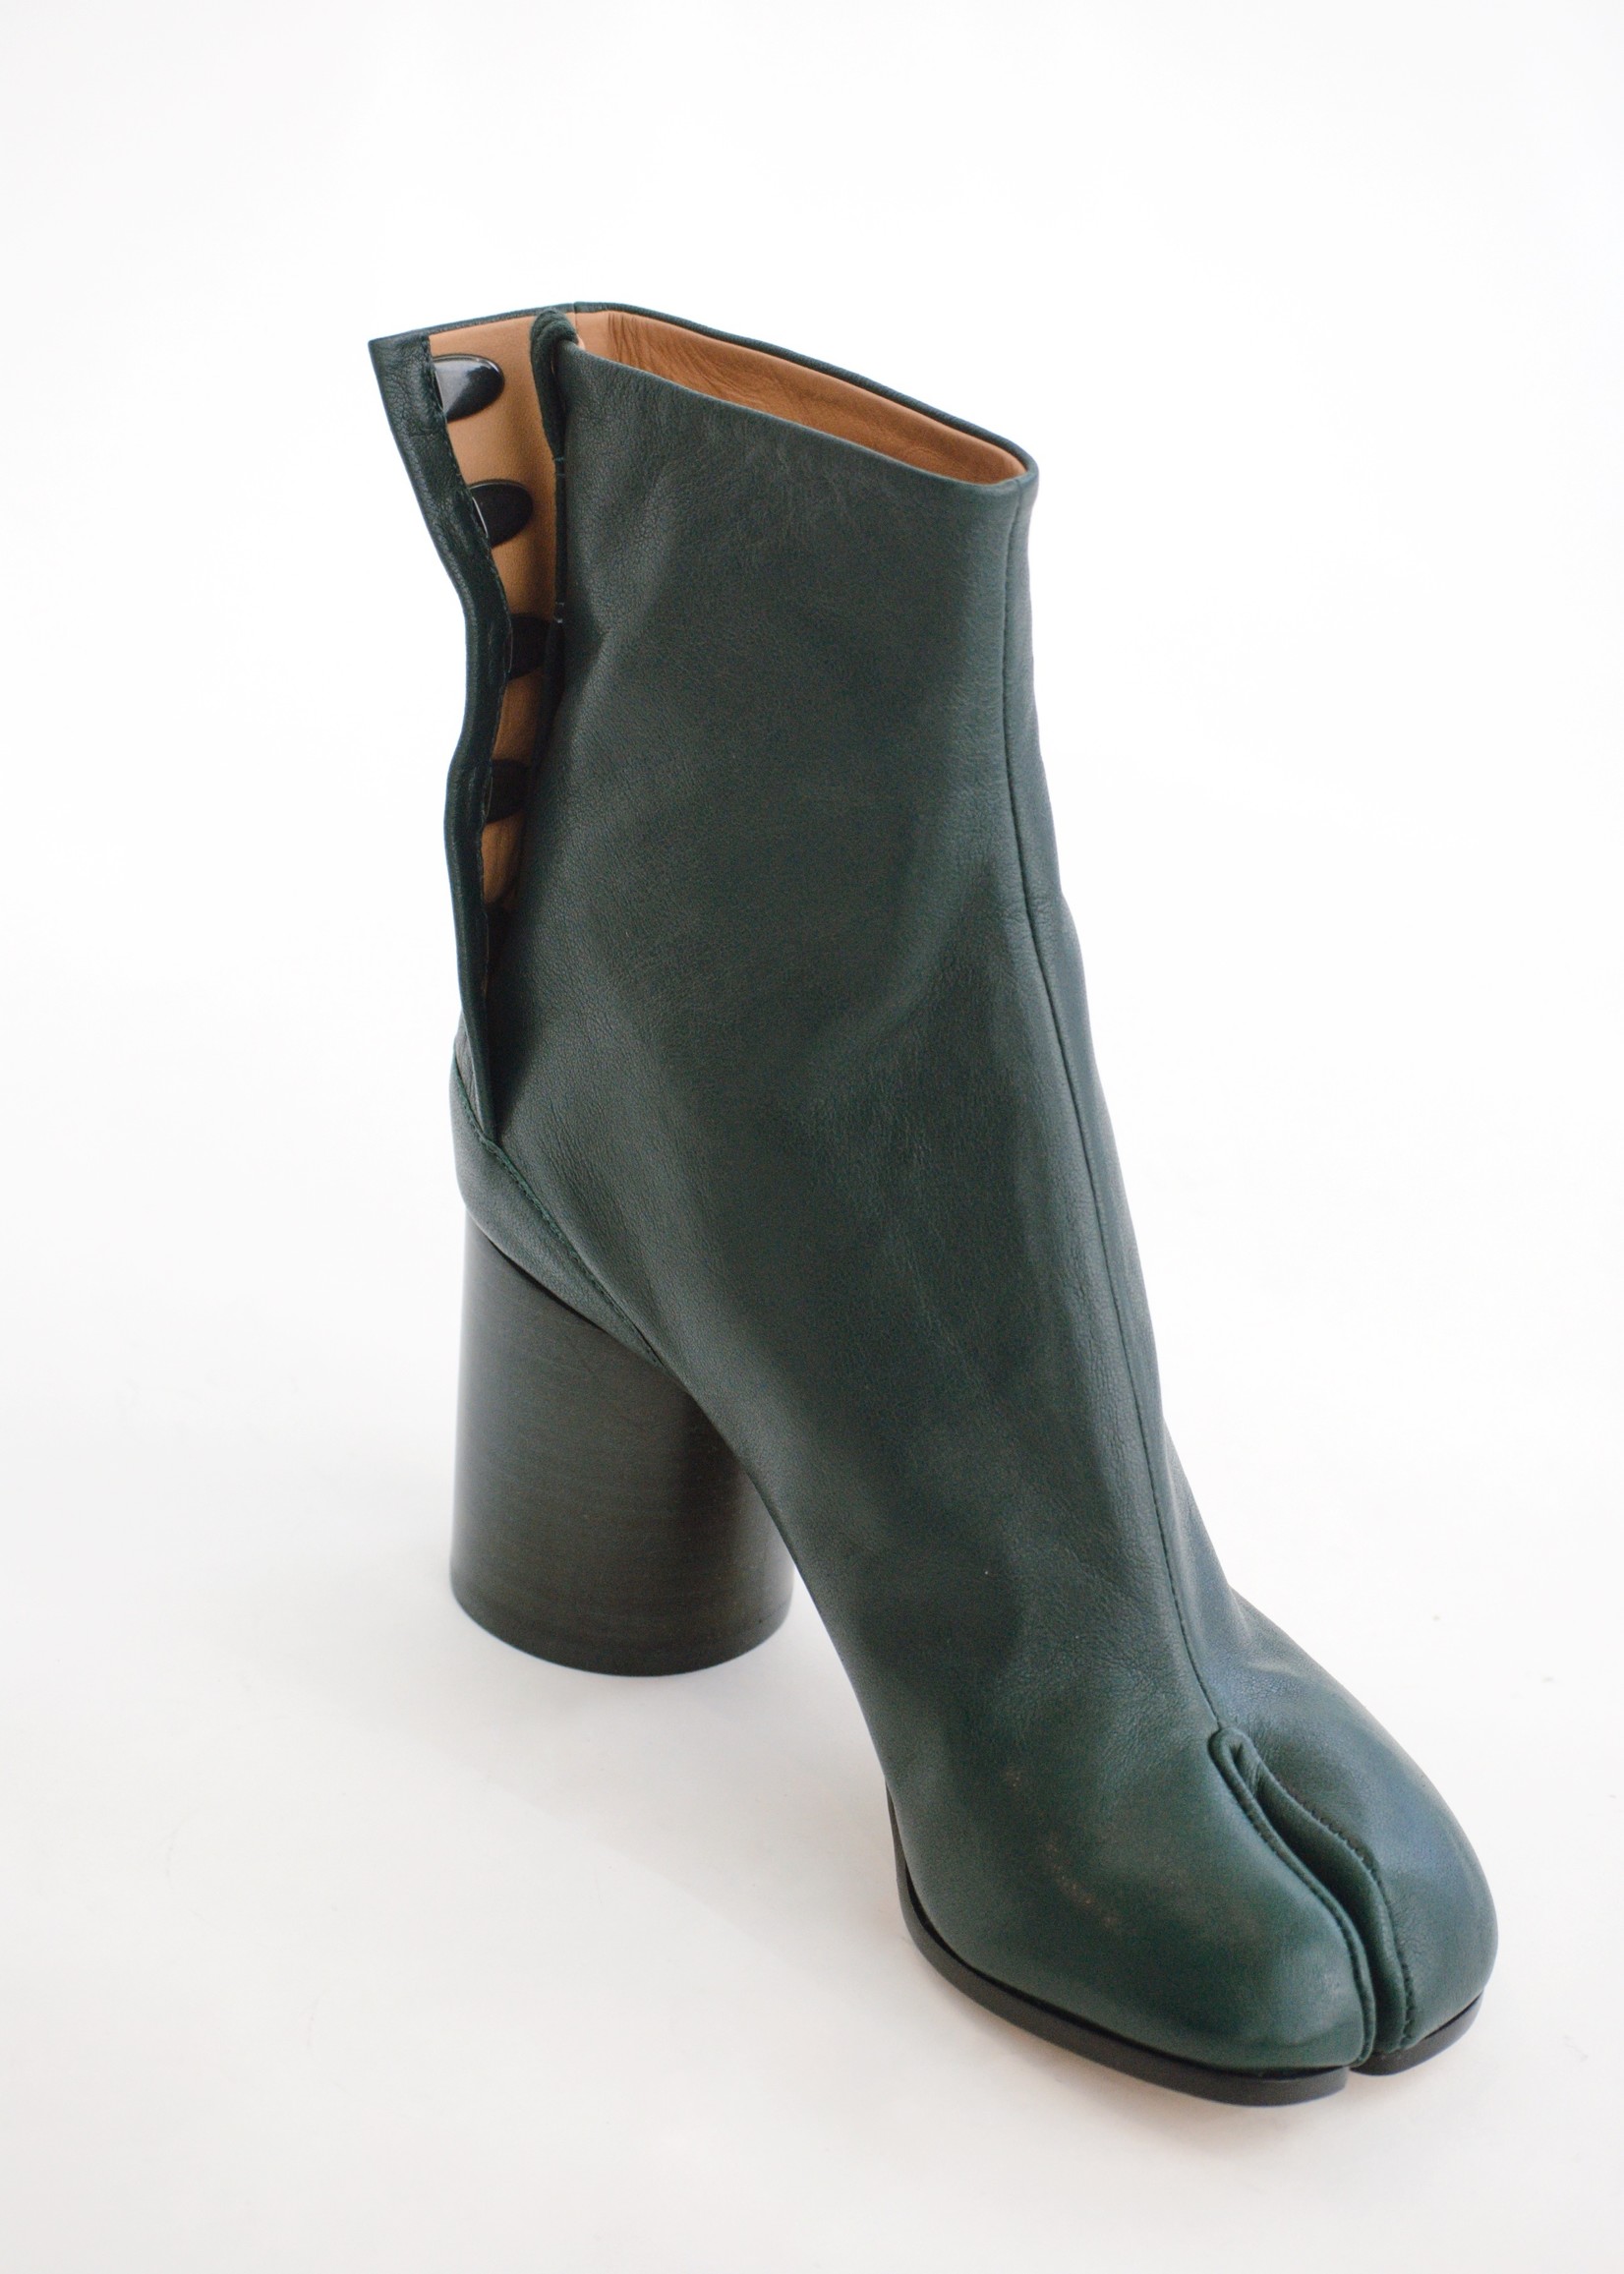 Maison Margiela Women's Tabi H80 Boots in Dark Teal